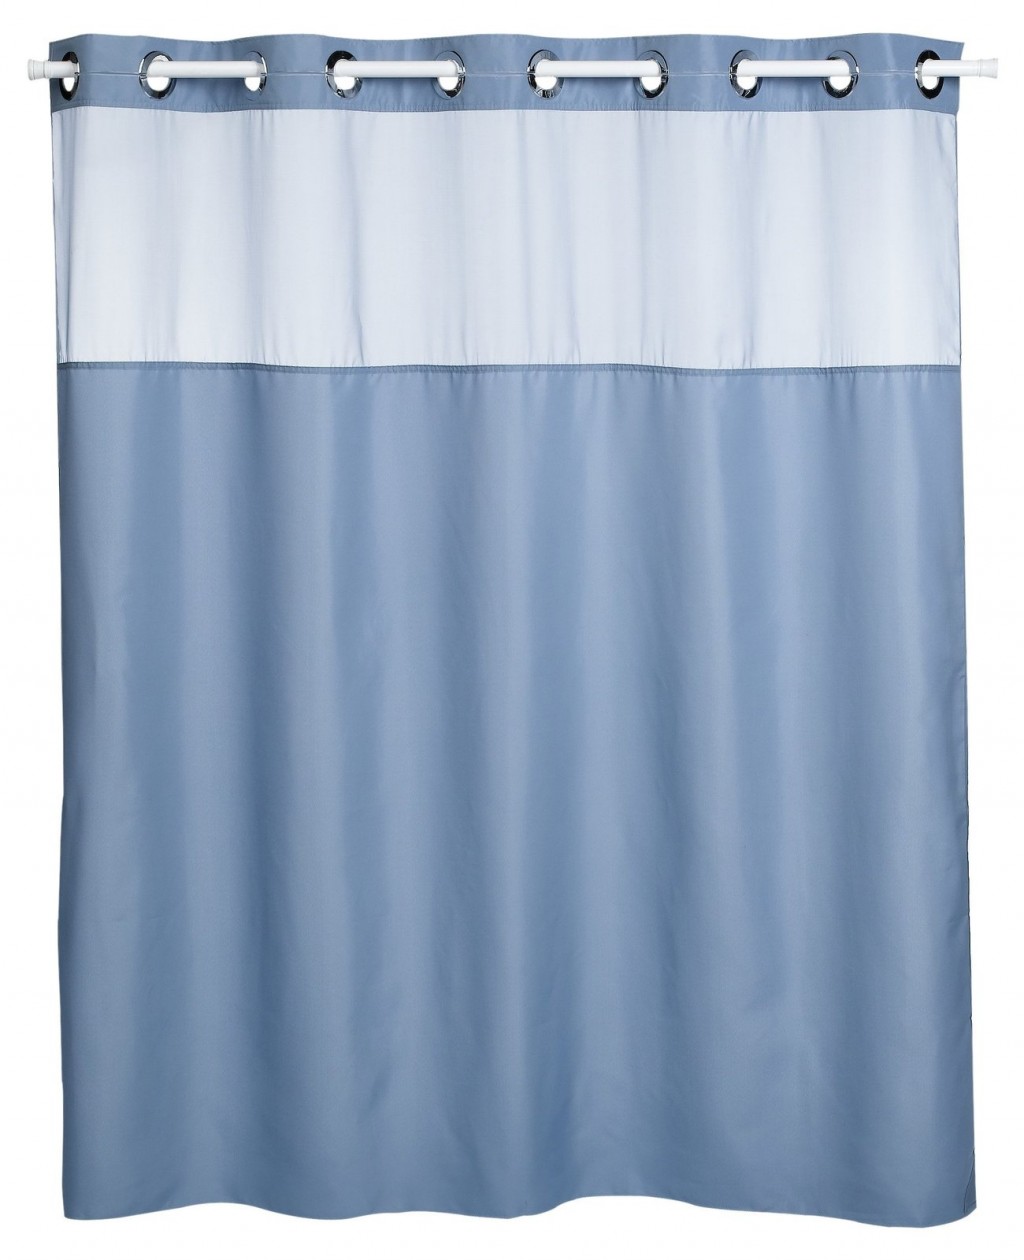 Standard Shower Curtain Size in Curtain